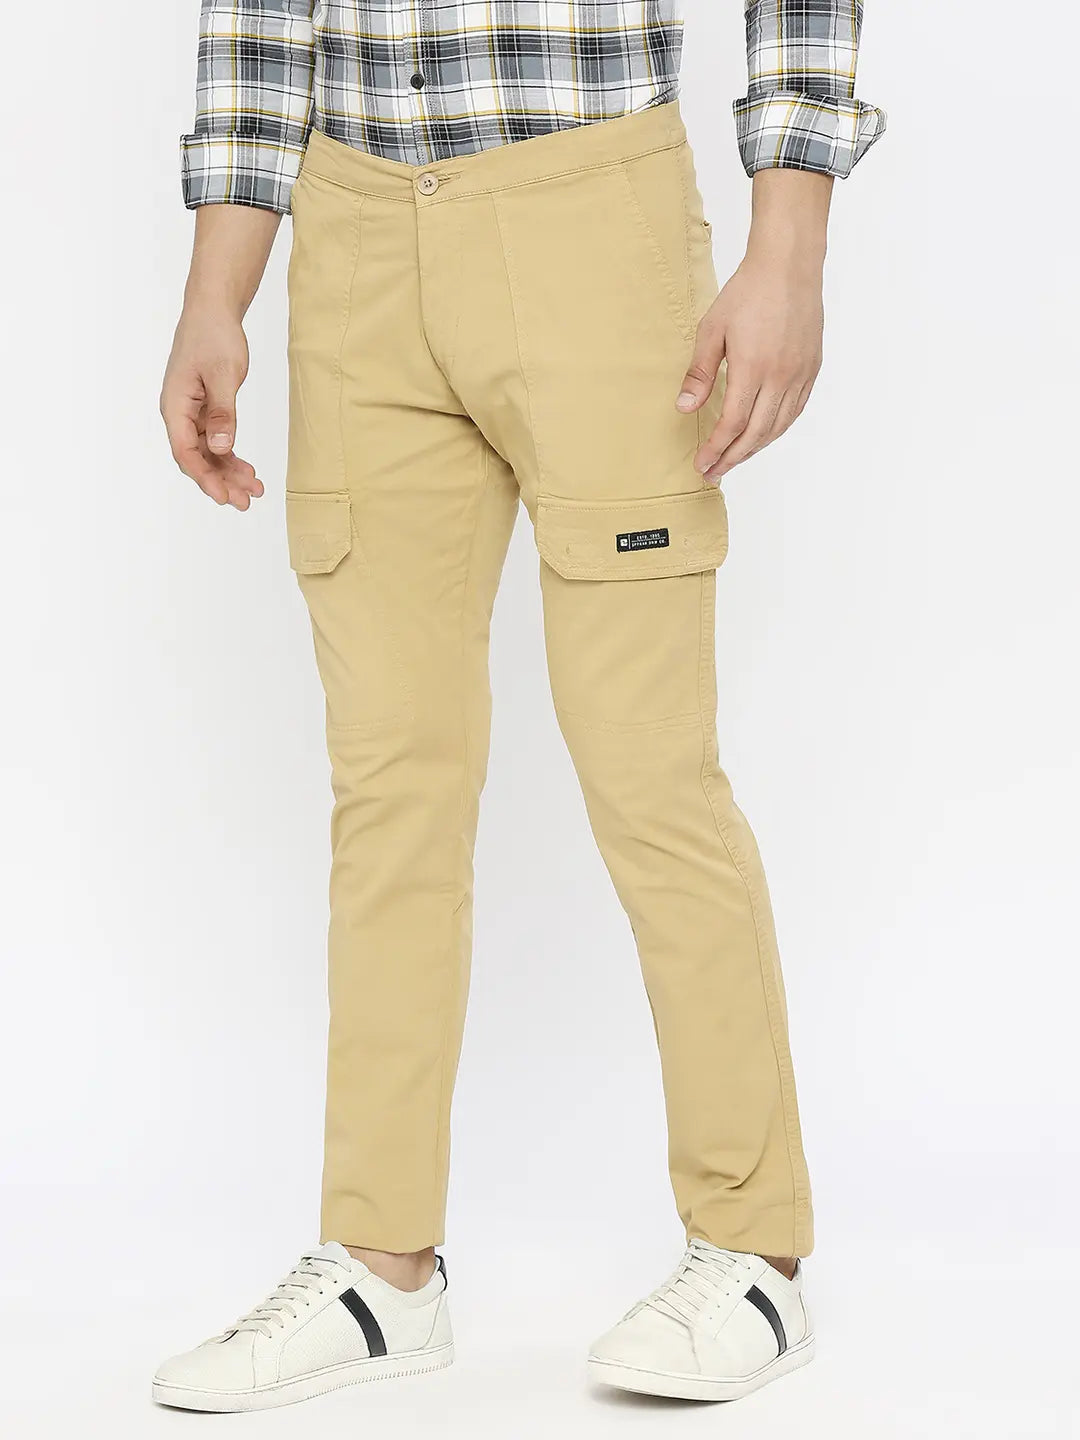 Spykar Olive Green Cotton Slim Fit Tapered Length Trousers For Men   vot02bb5p004olivegreen